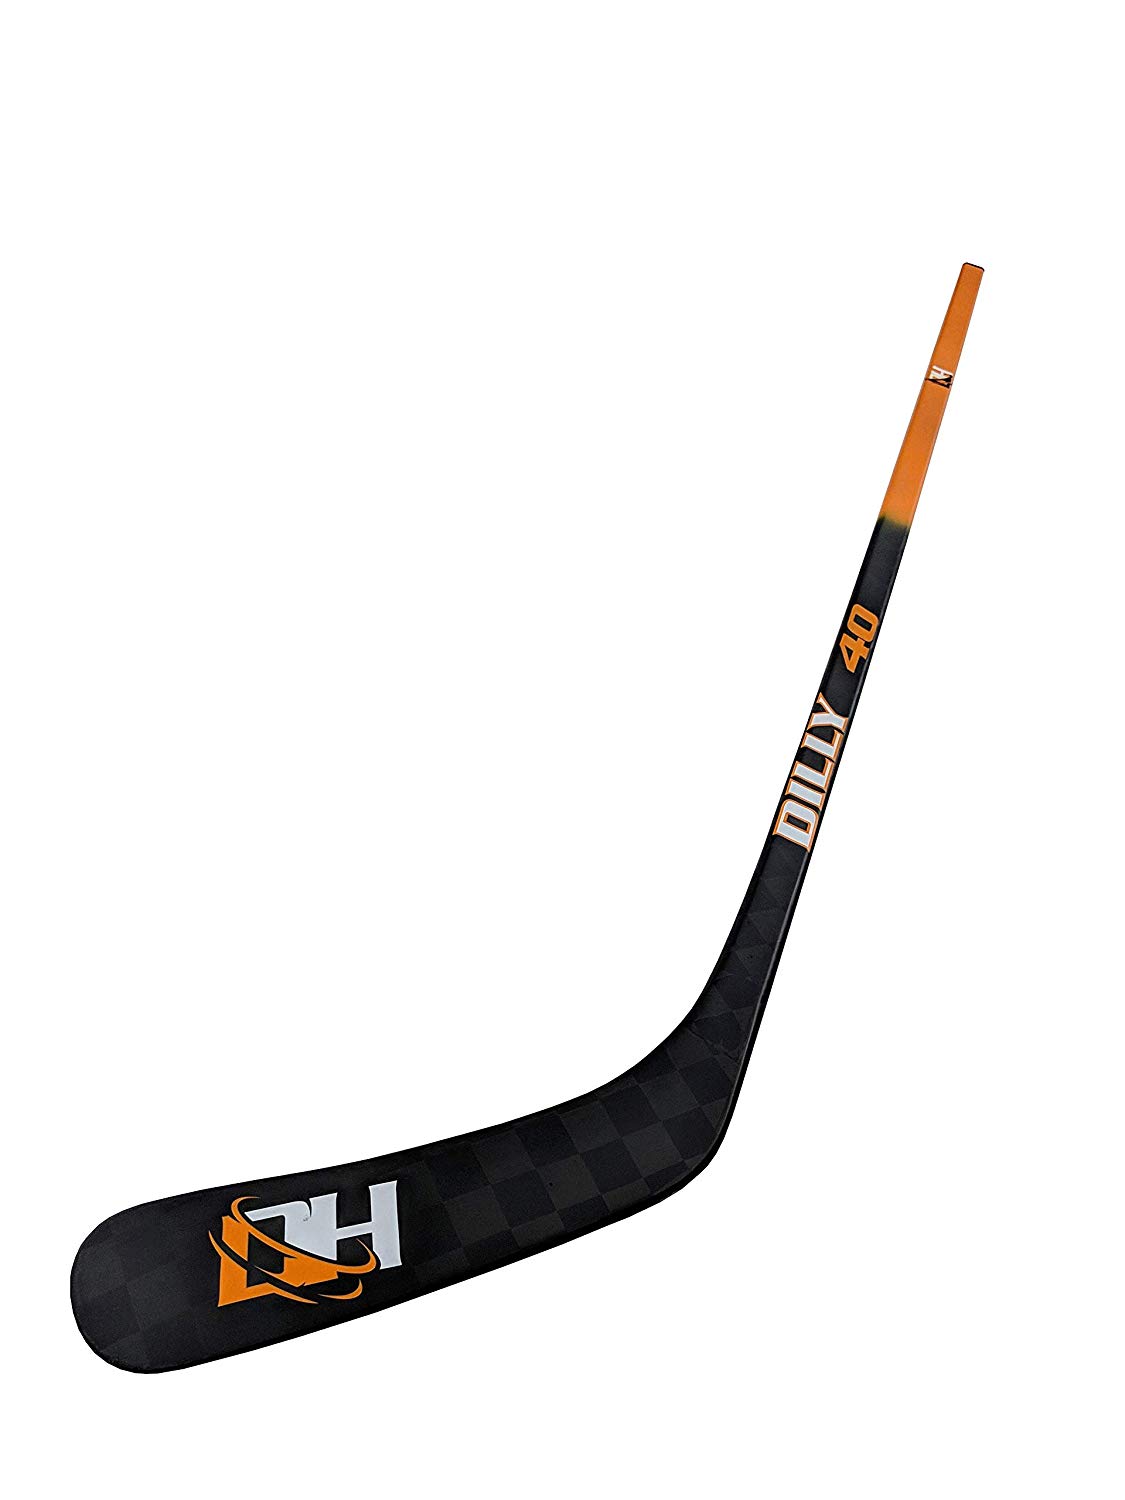 DILLY Junior Hockey Stick